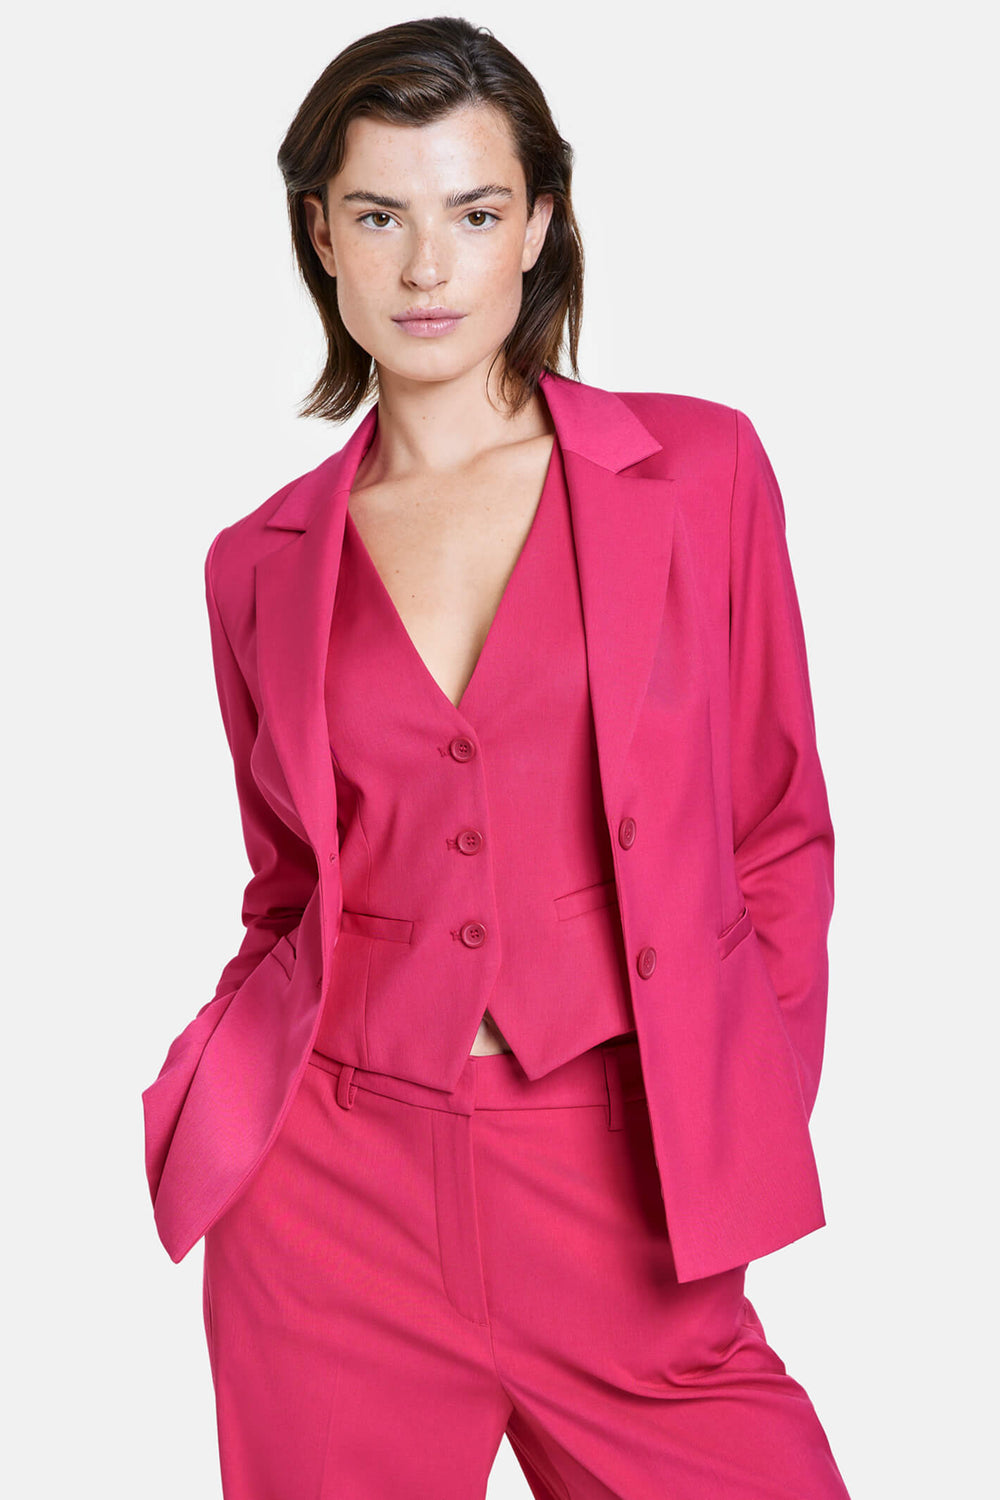 Taifun 430401 Luminous Pink Blazer Jacket - Experience Boutique